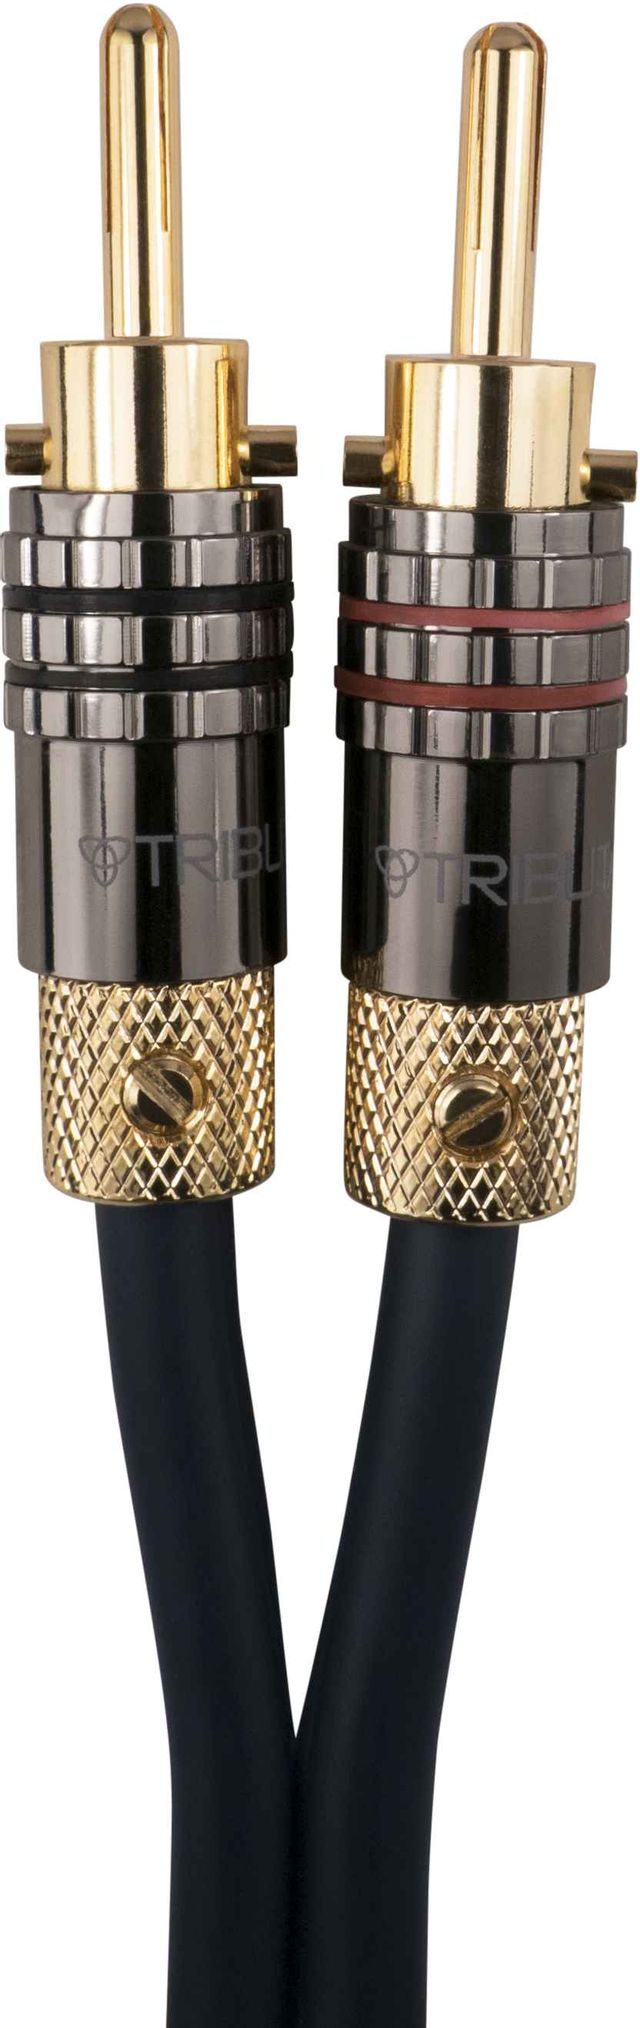 Tributaries® Series 8 12 Ft. Banana Plugs Speaker Cable